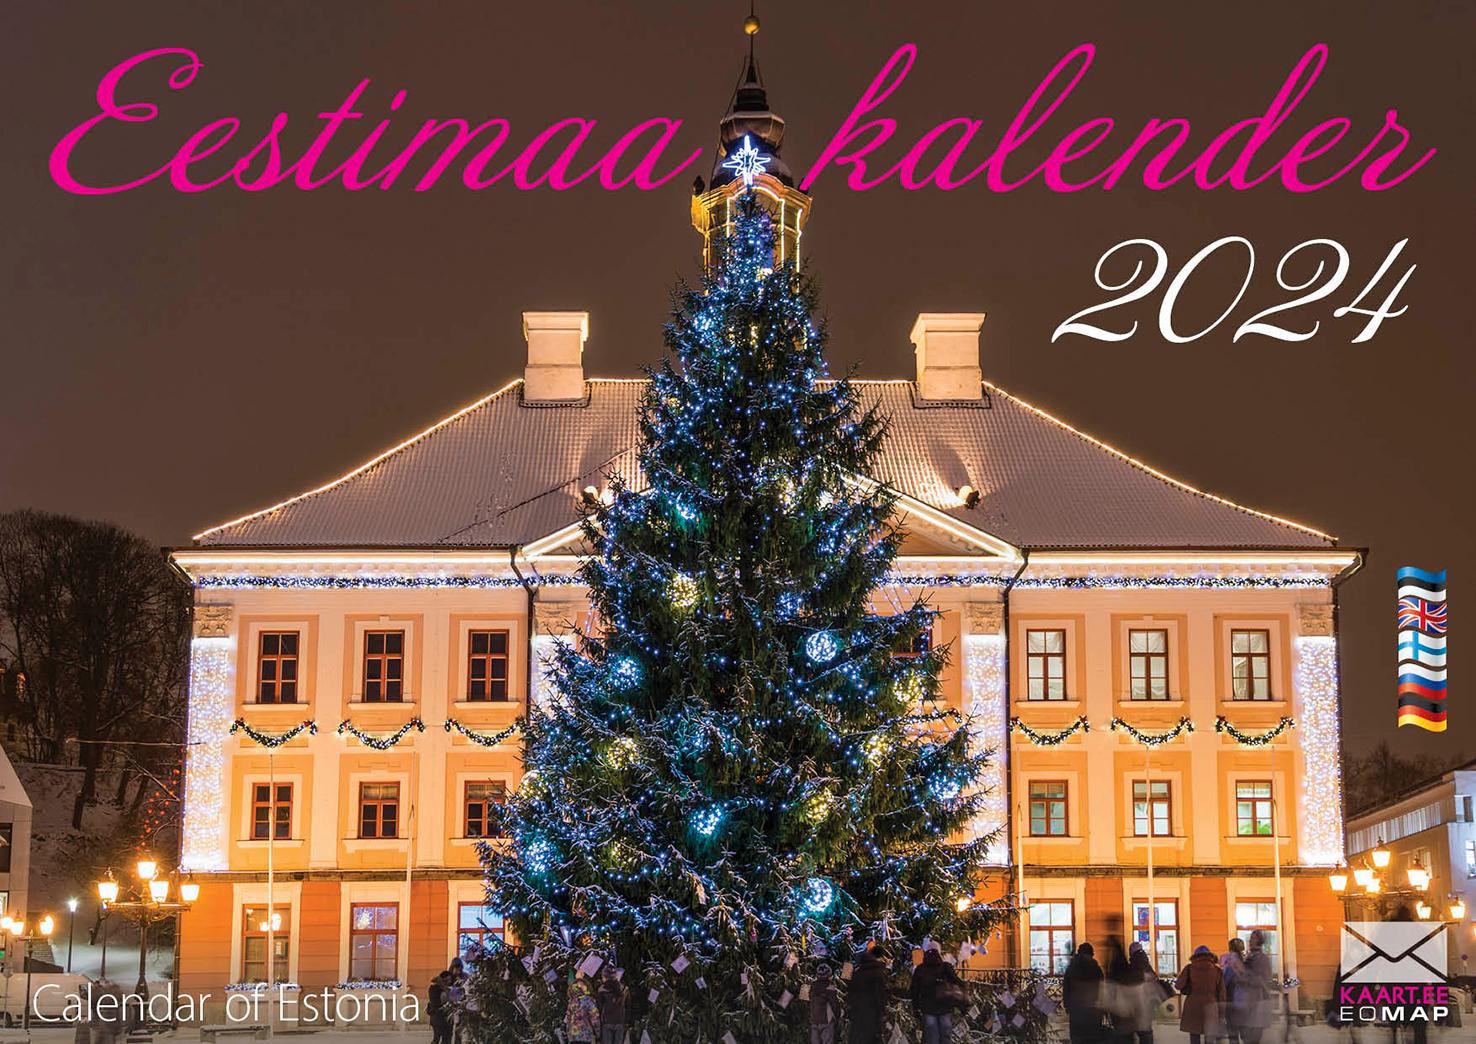 Eestimaa kalender 2024